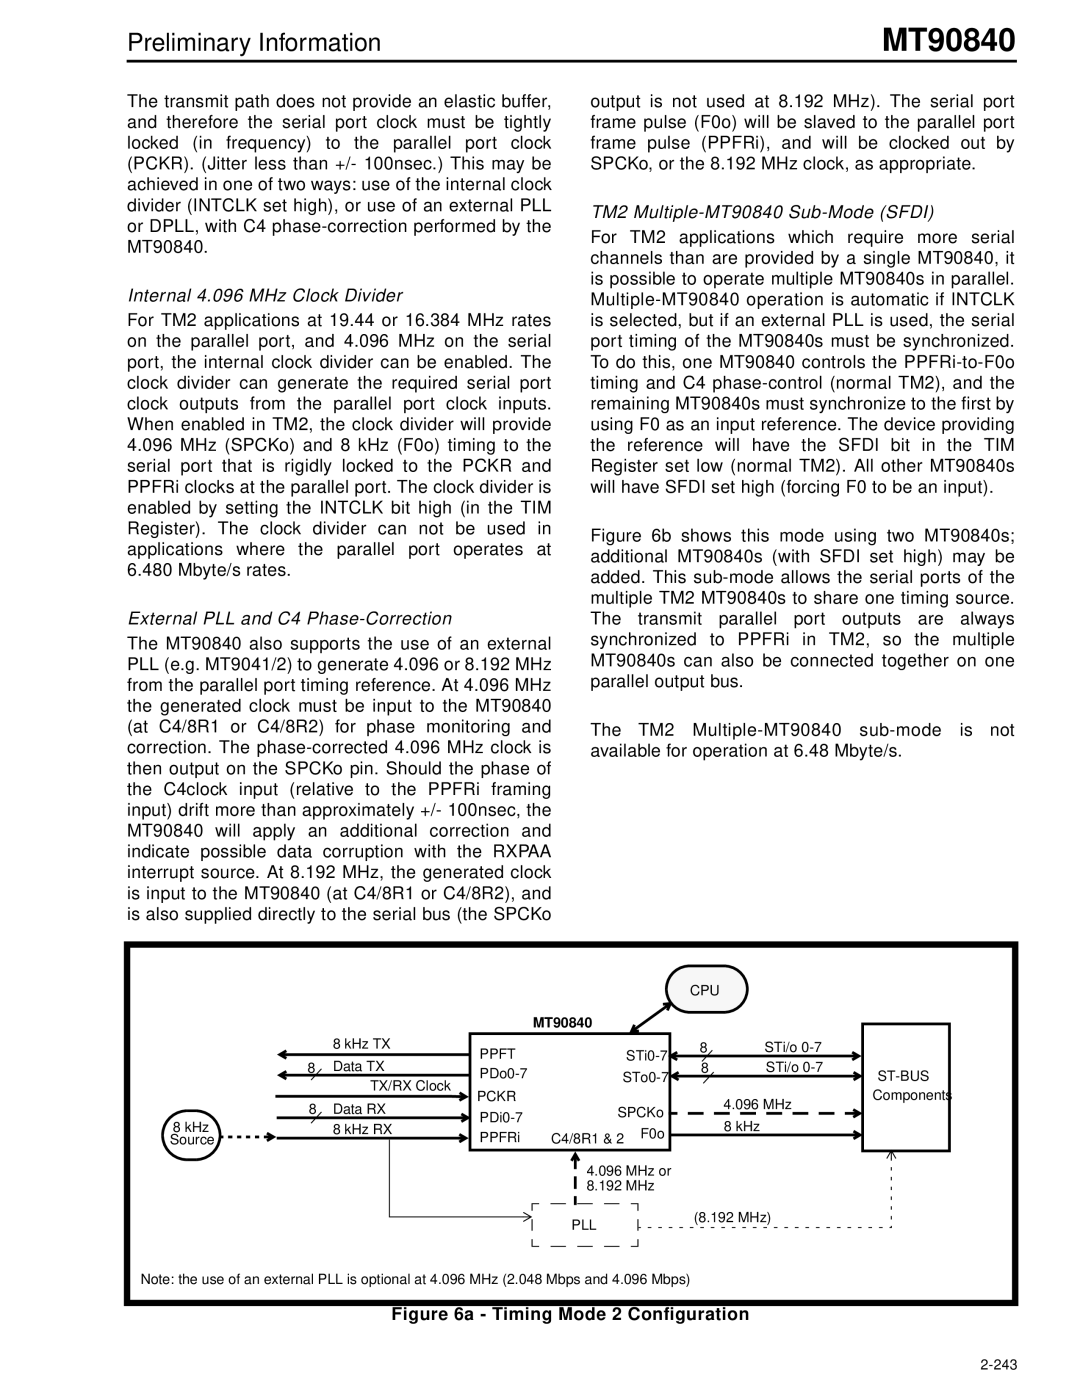 Mitel manual Internal 4.096 MHz Clock Divider, External PLL and C4 Phase-Correction, TM2 Multiple-MT90840 Sub-Mode Sfdi 